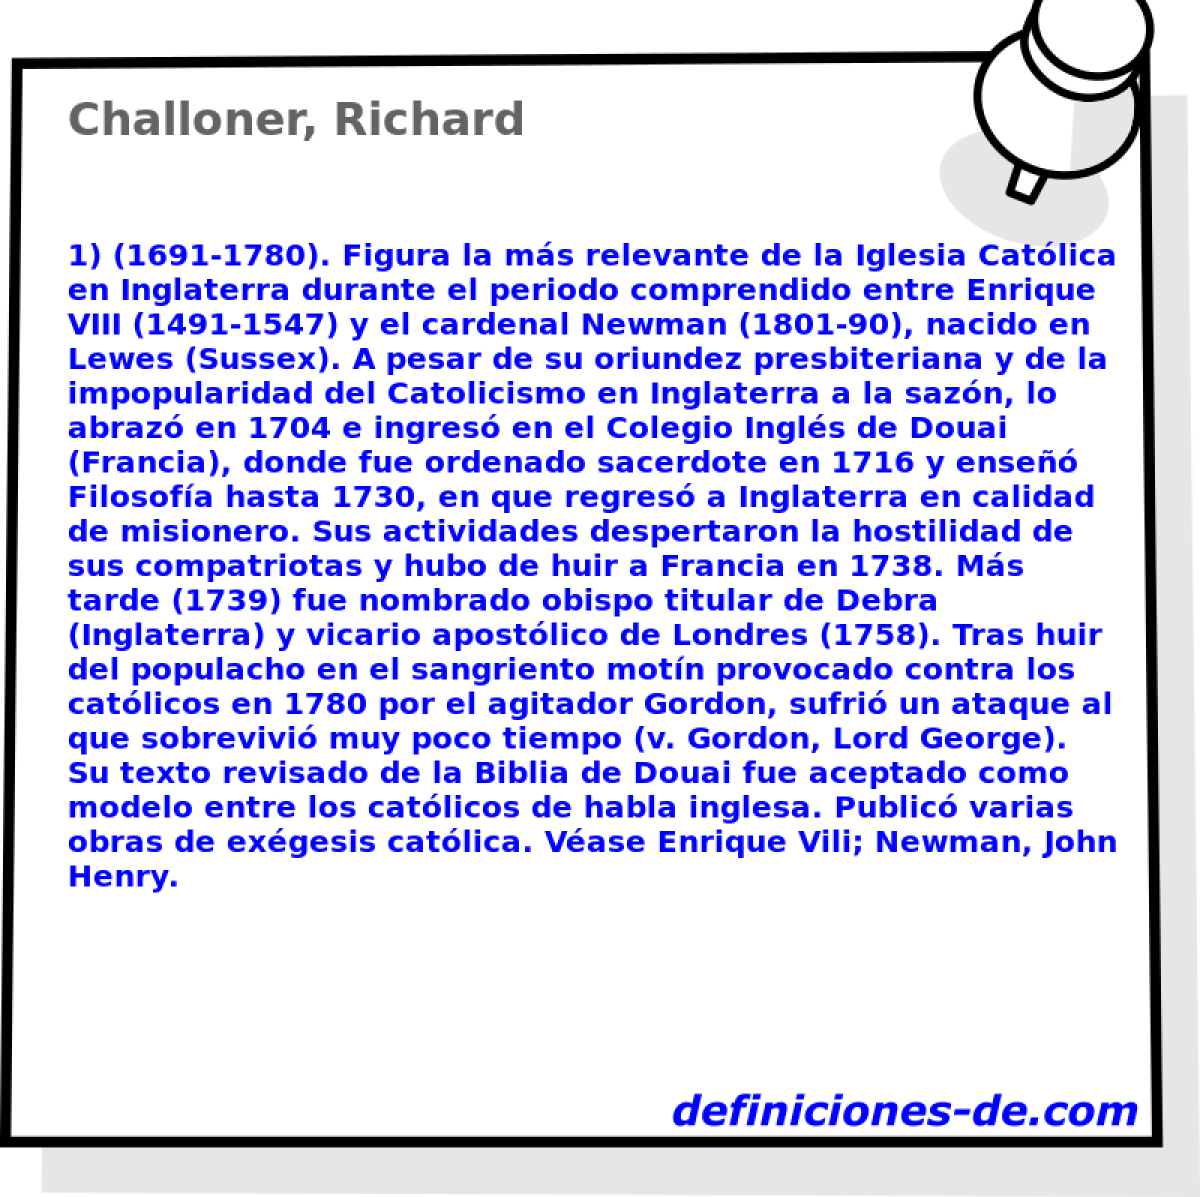 Challoner, Richard 